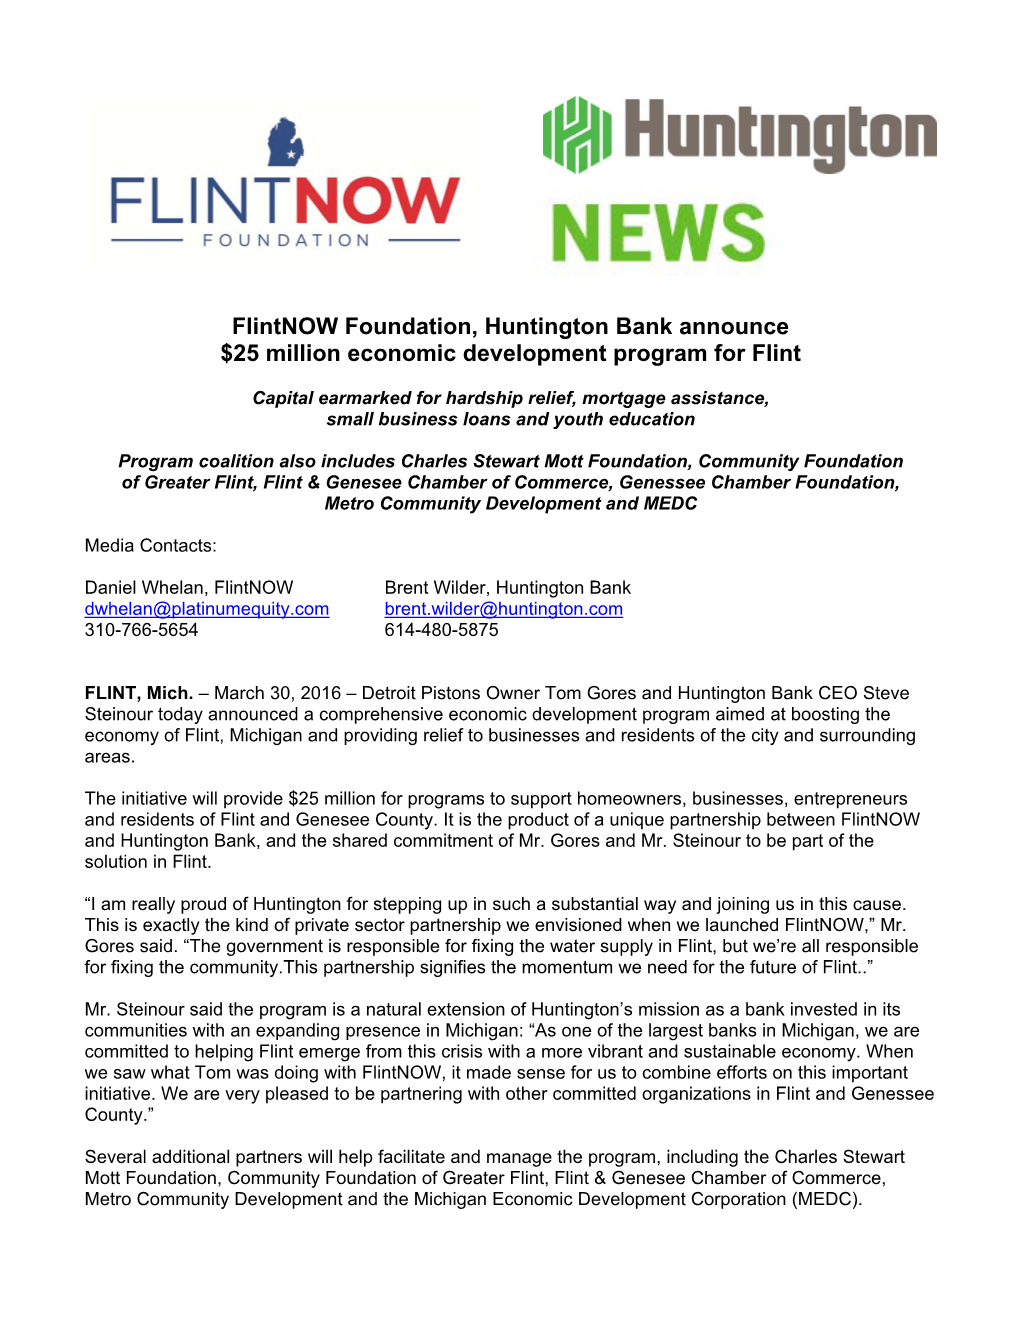 Flintnow Foundation, Huntington Bank Announce $25 Million Economic Development Program for Flint